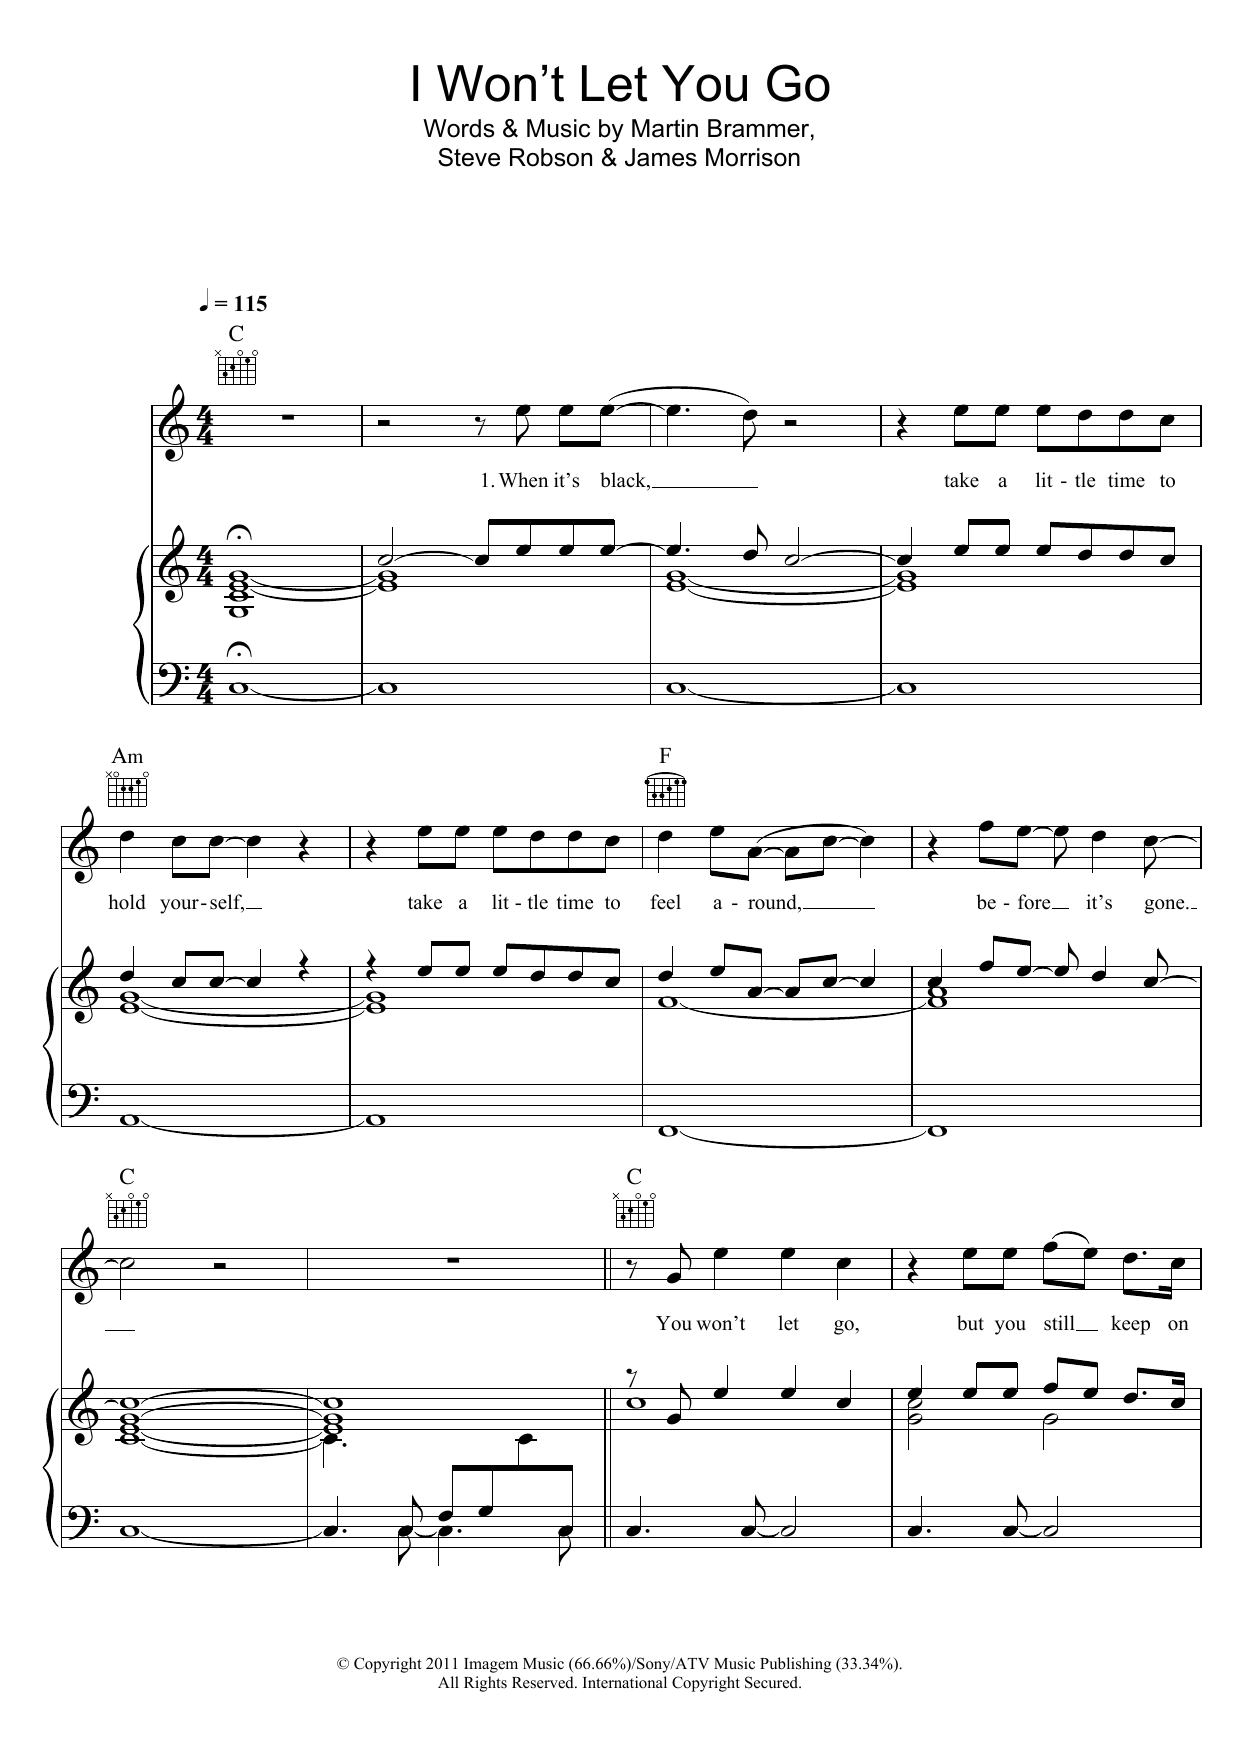 James Morrison I Won't Let You Go Sheet Music Notes & Chords for Keyboard - Download or Print PDF